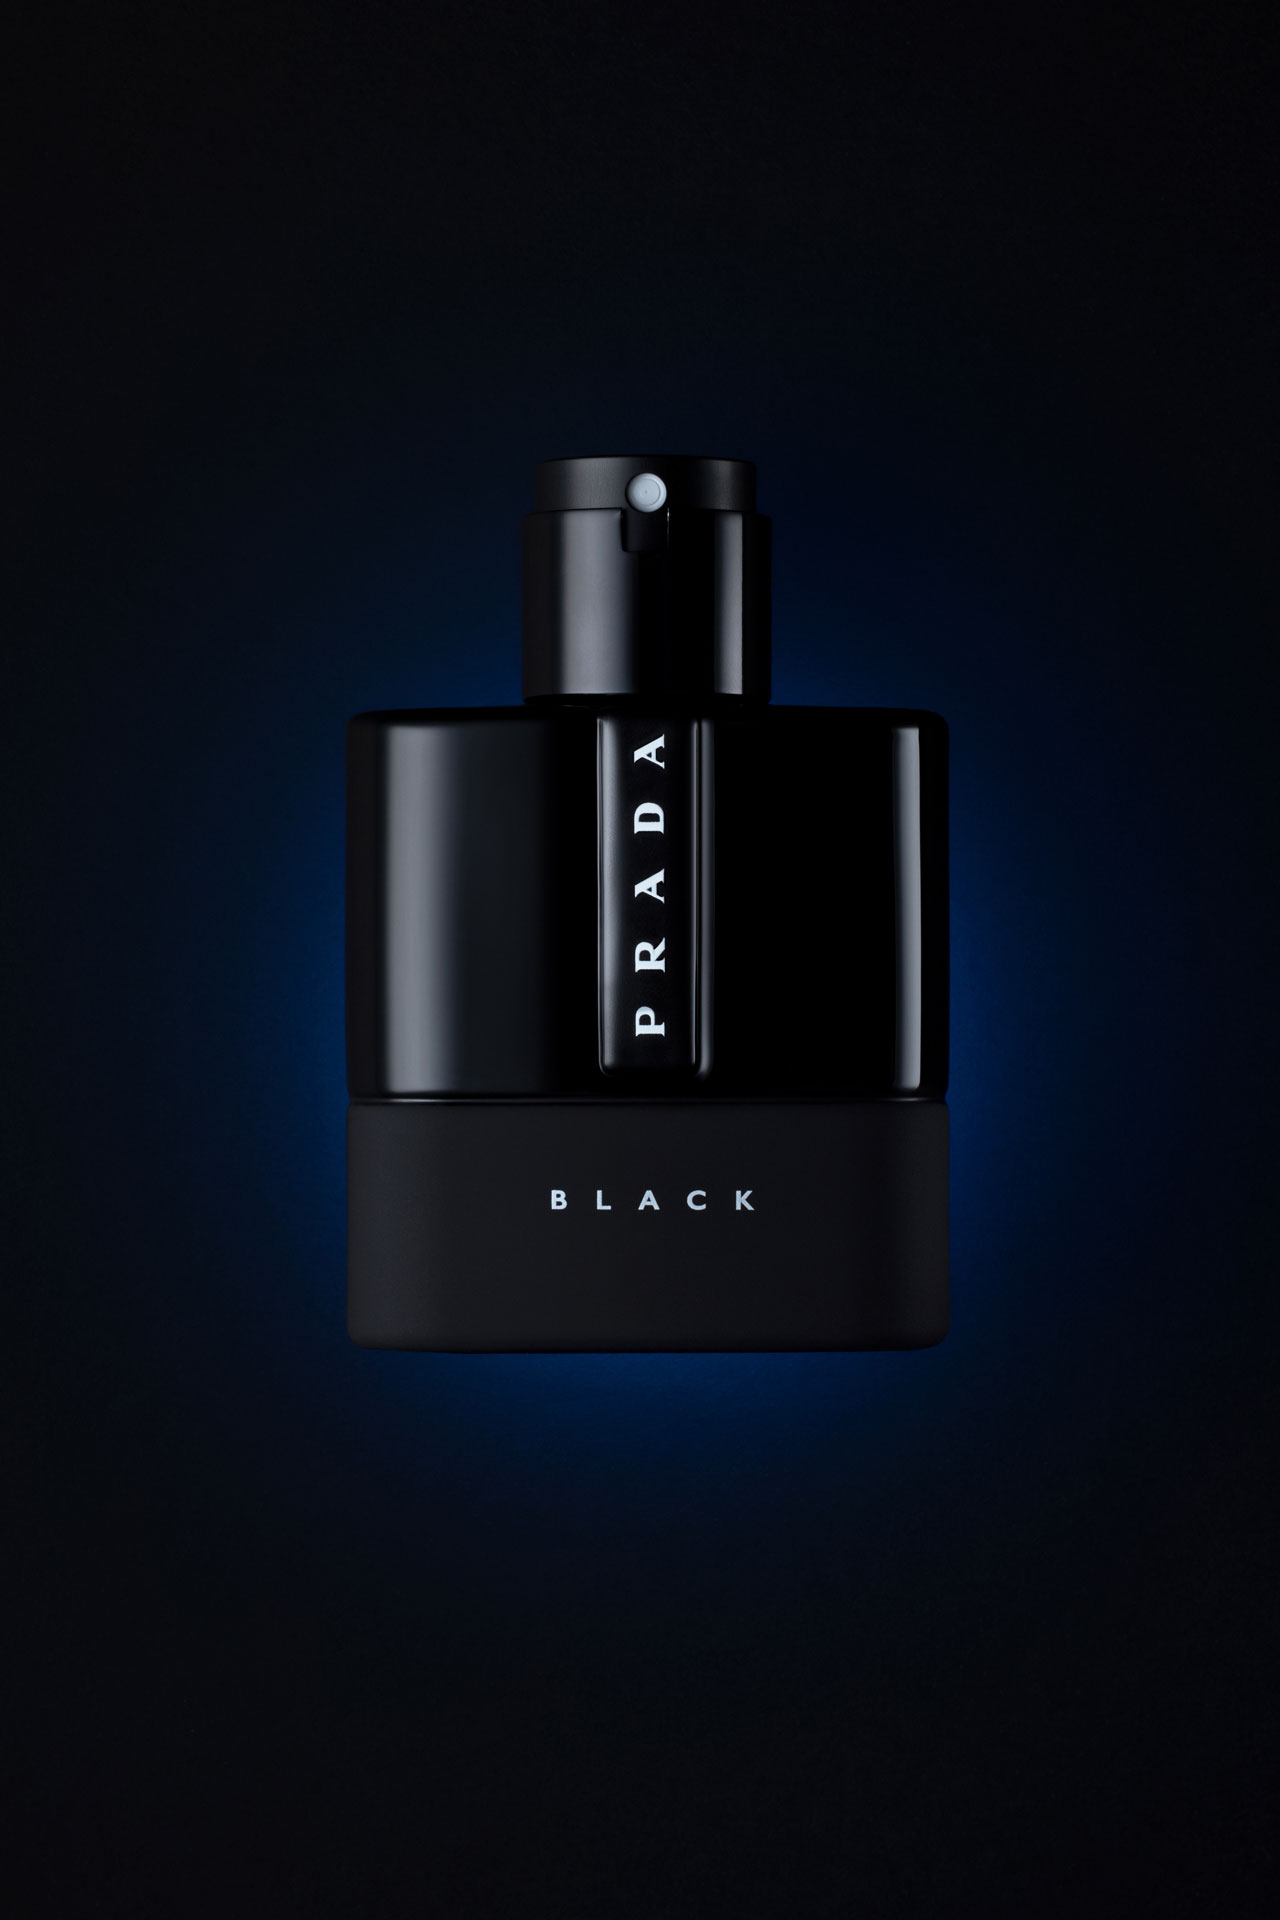 Productfotografie - Prada parfum